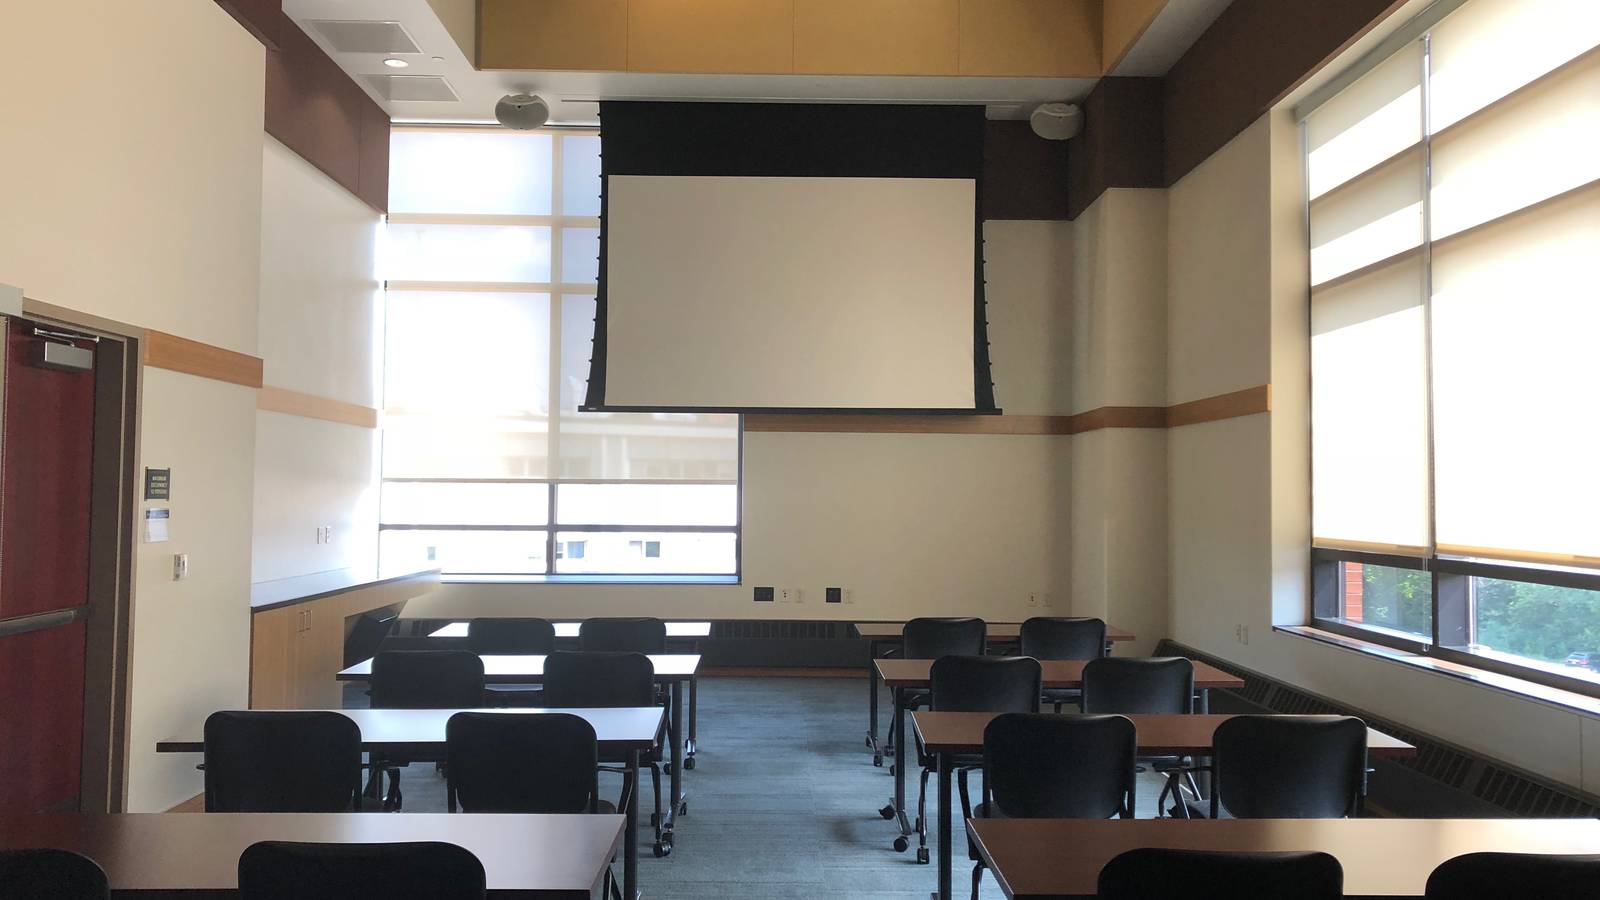 Chancellors Room: classroom setup